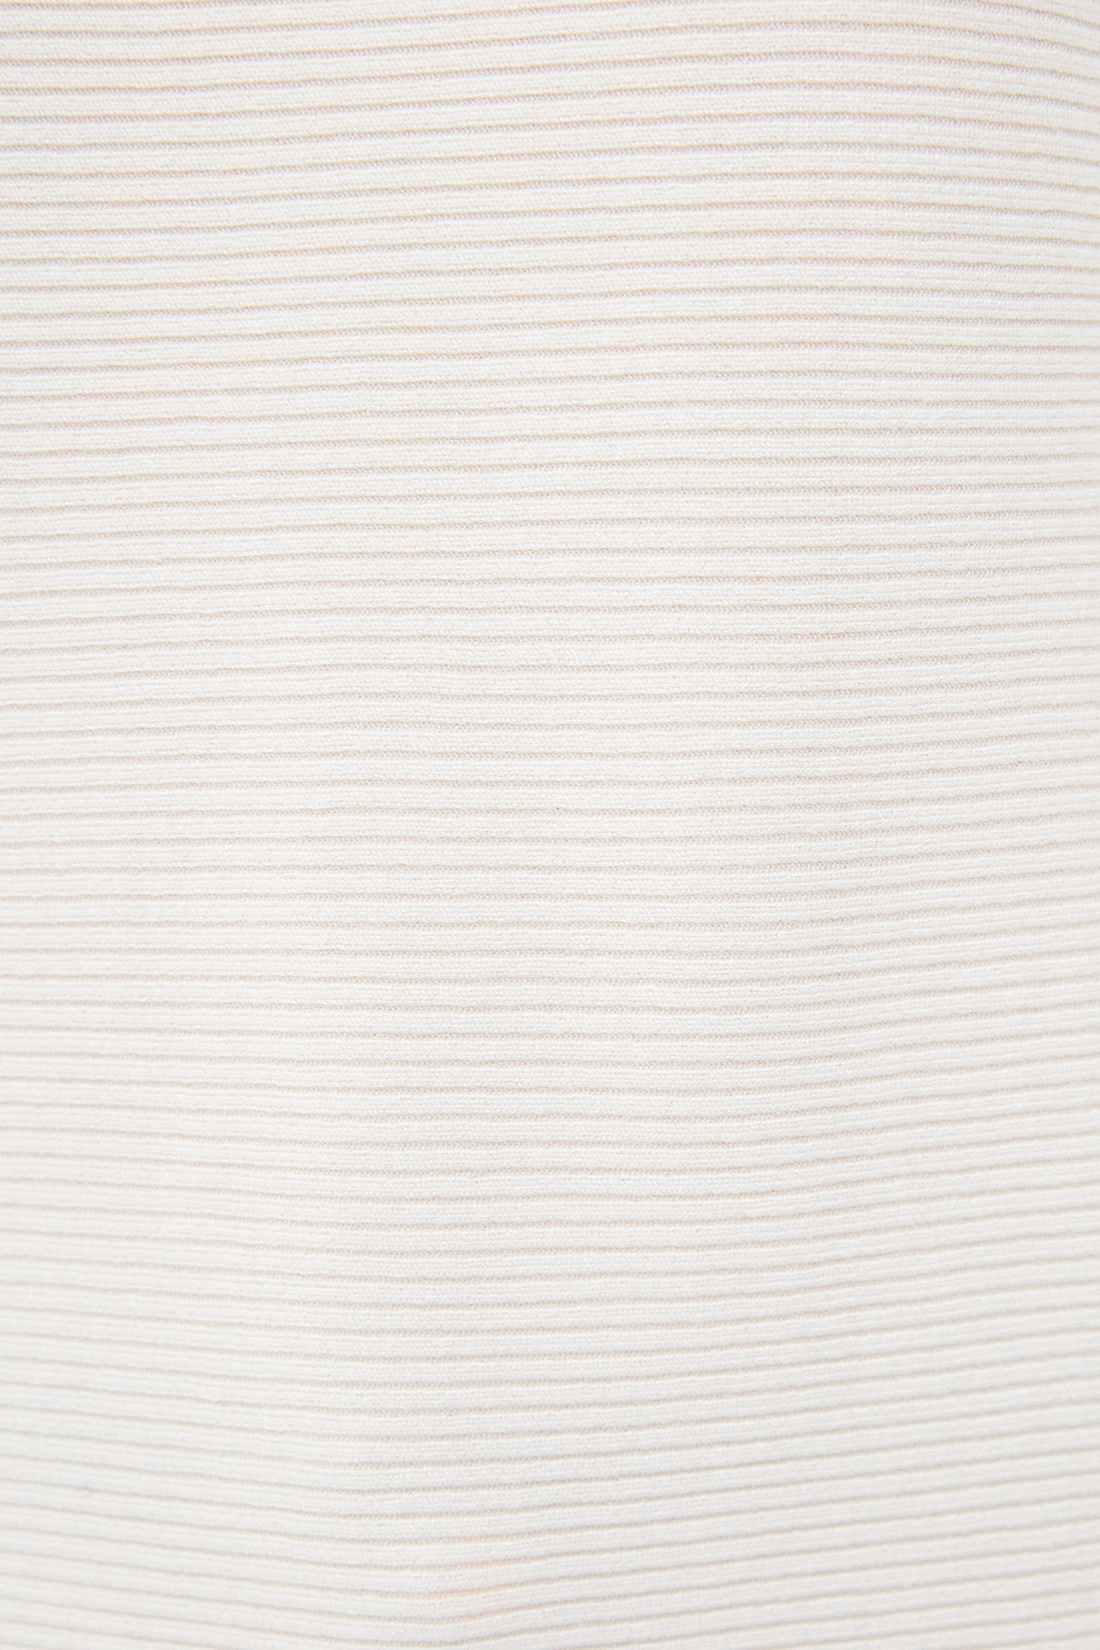 Джемпер (арт. baon B130606), размер XXL, цвет белый Джемпер (арт. baon B130606) - фото 3